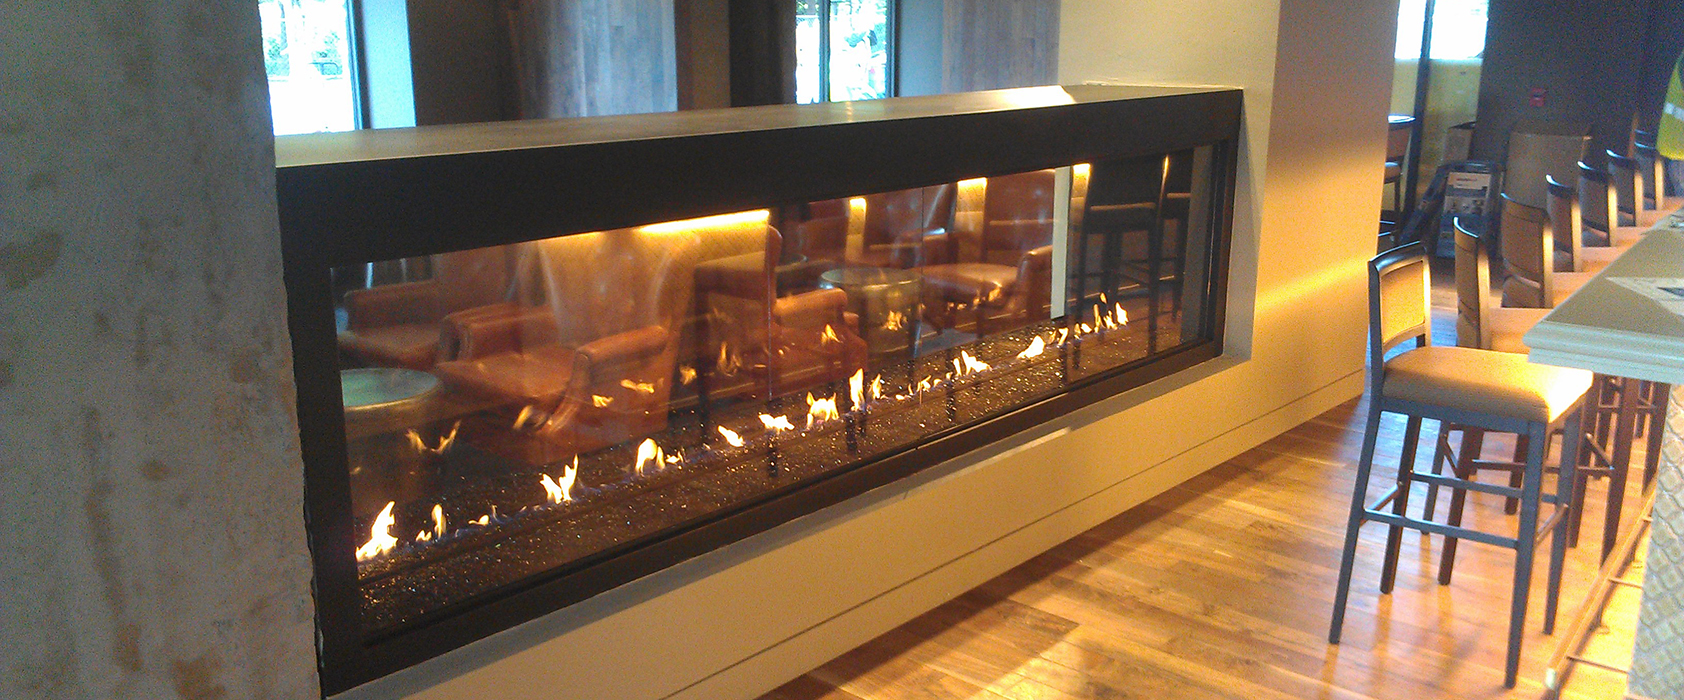 double sided custom fireplace